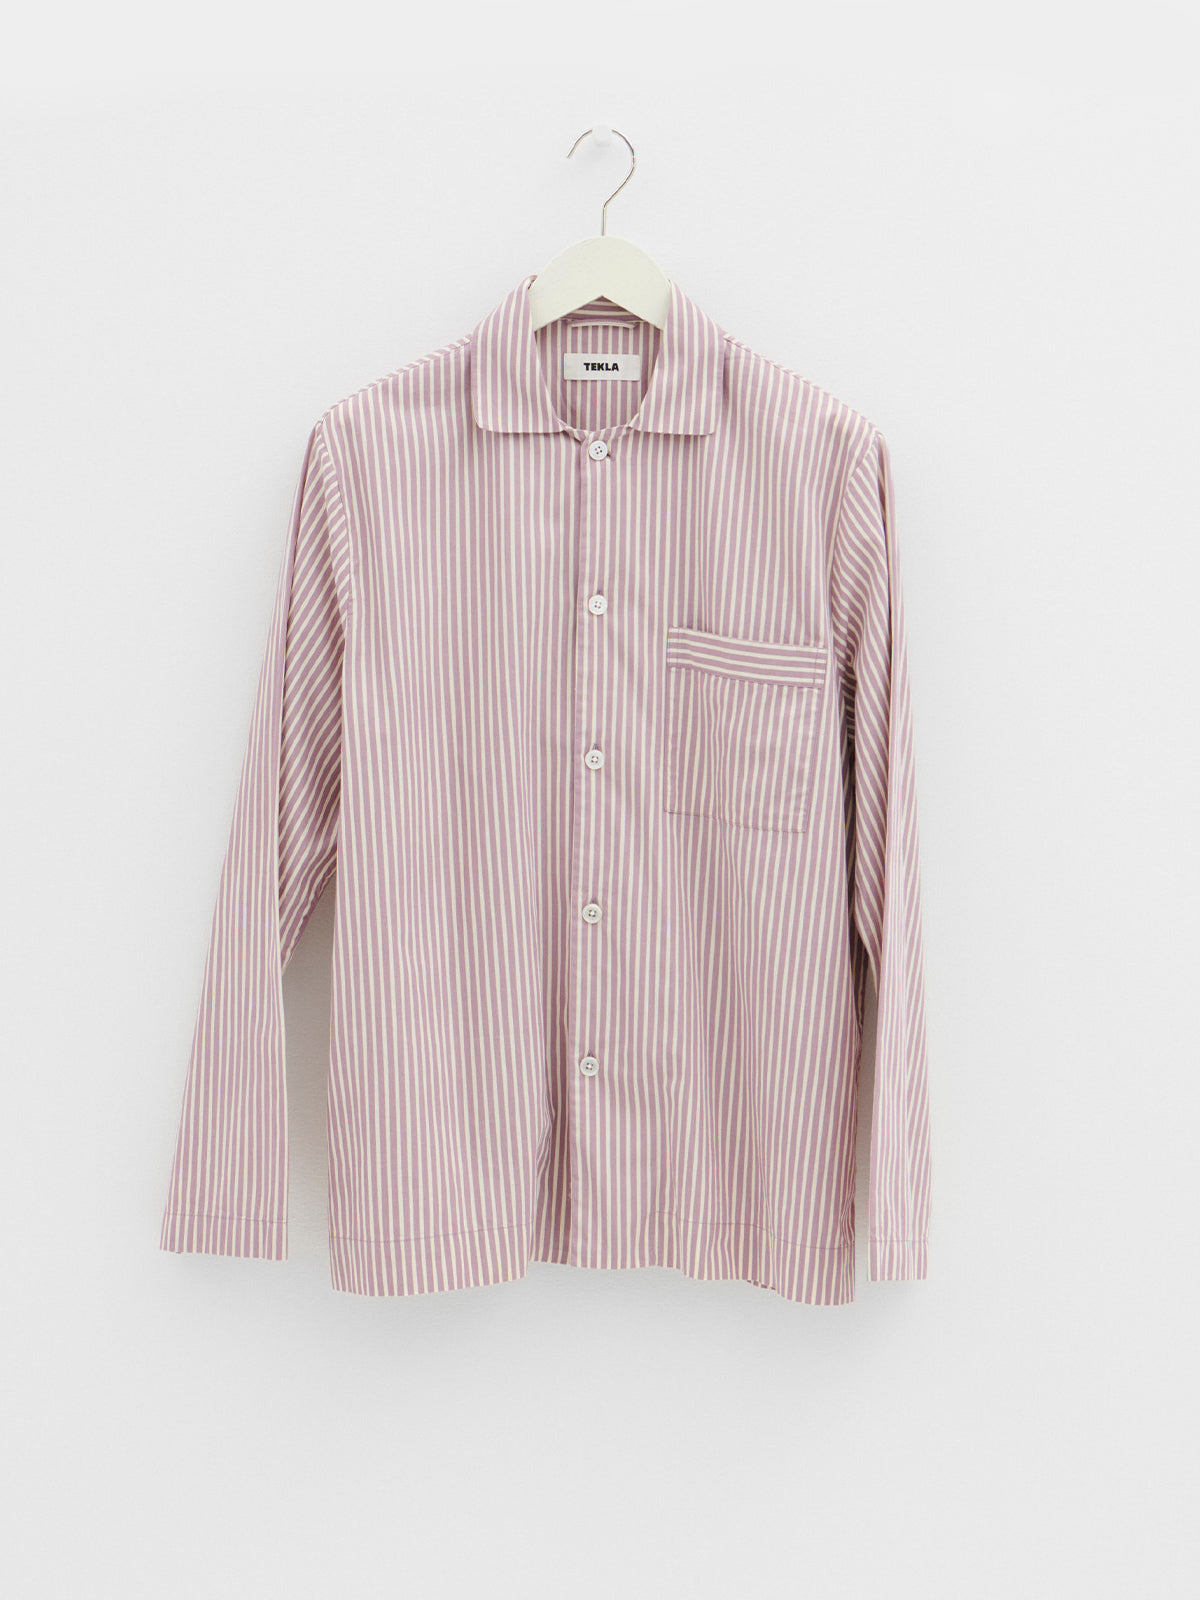 Tekla - Poplin Pyjamas Shirt in Skipper Stripes